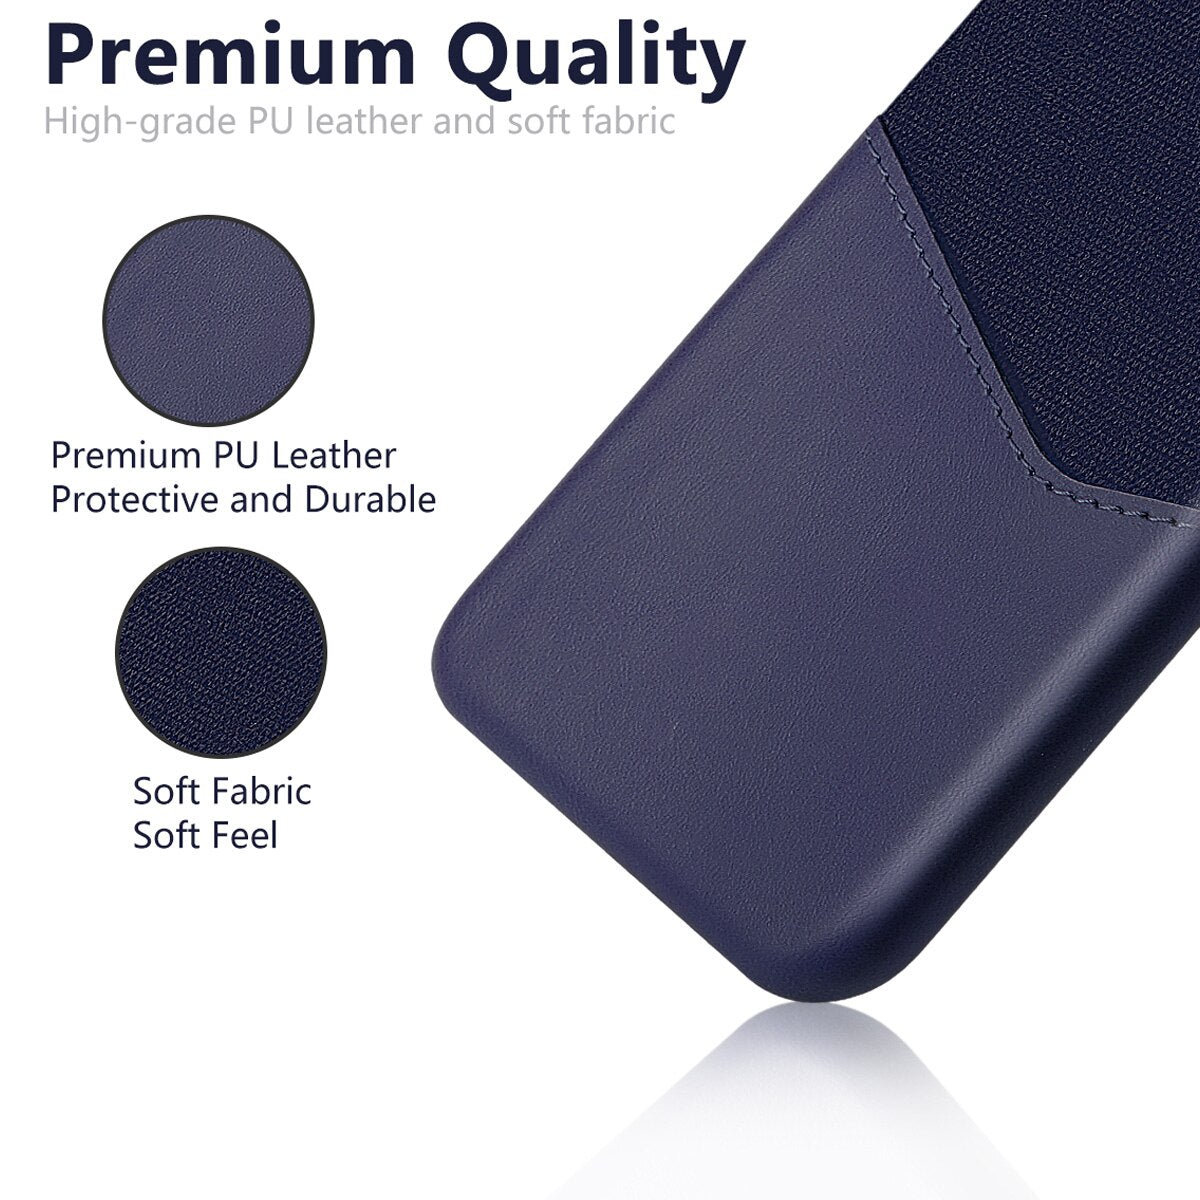 Samsung Galaxy M51 high quality premium and unique designer leather case cover